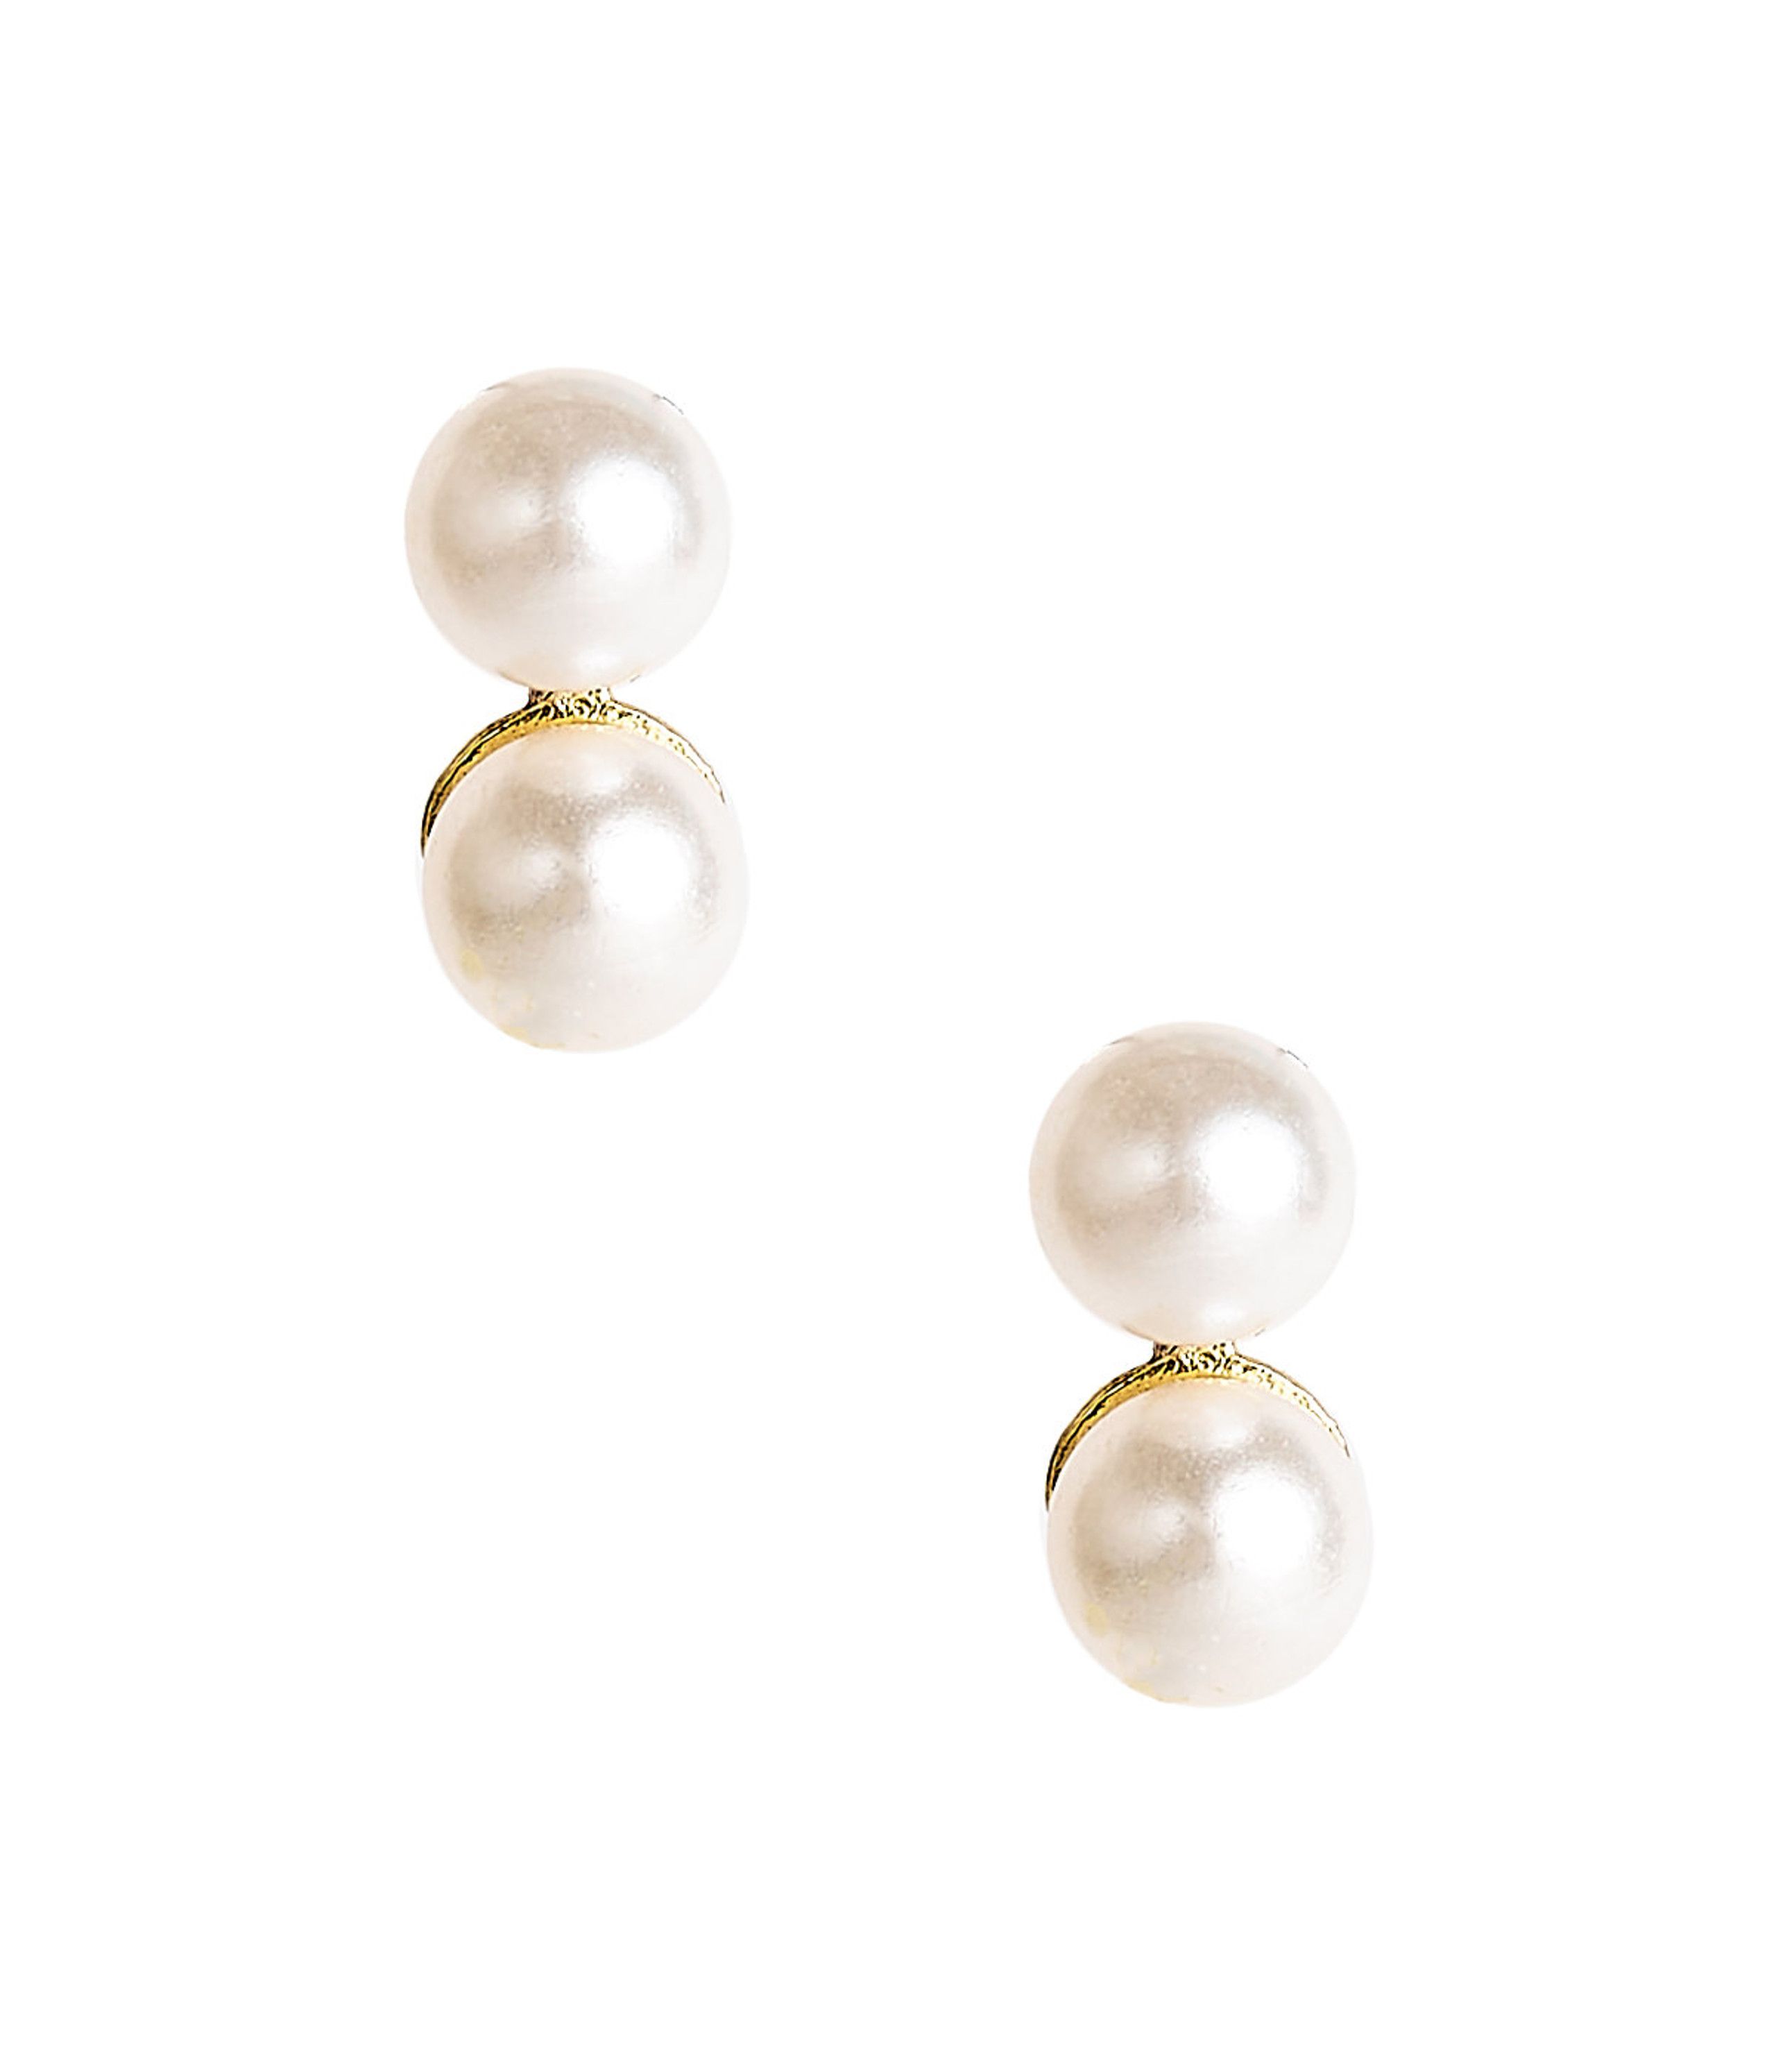 Belle - Double Pearl earrings - PreOrder | Lisi Lerch Inc